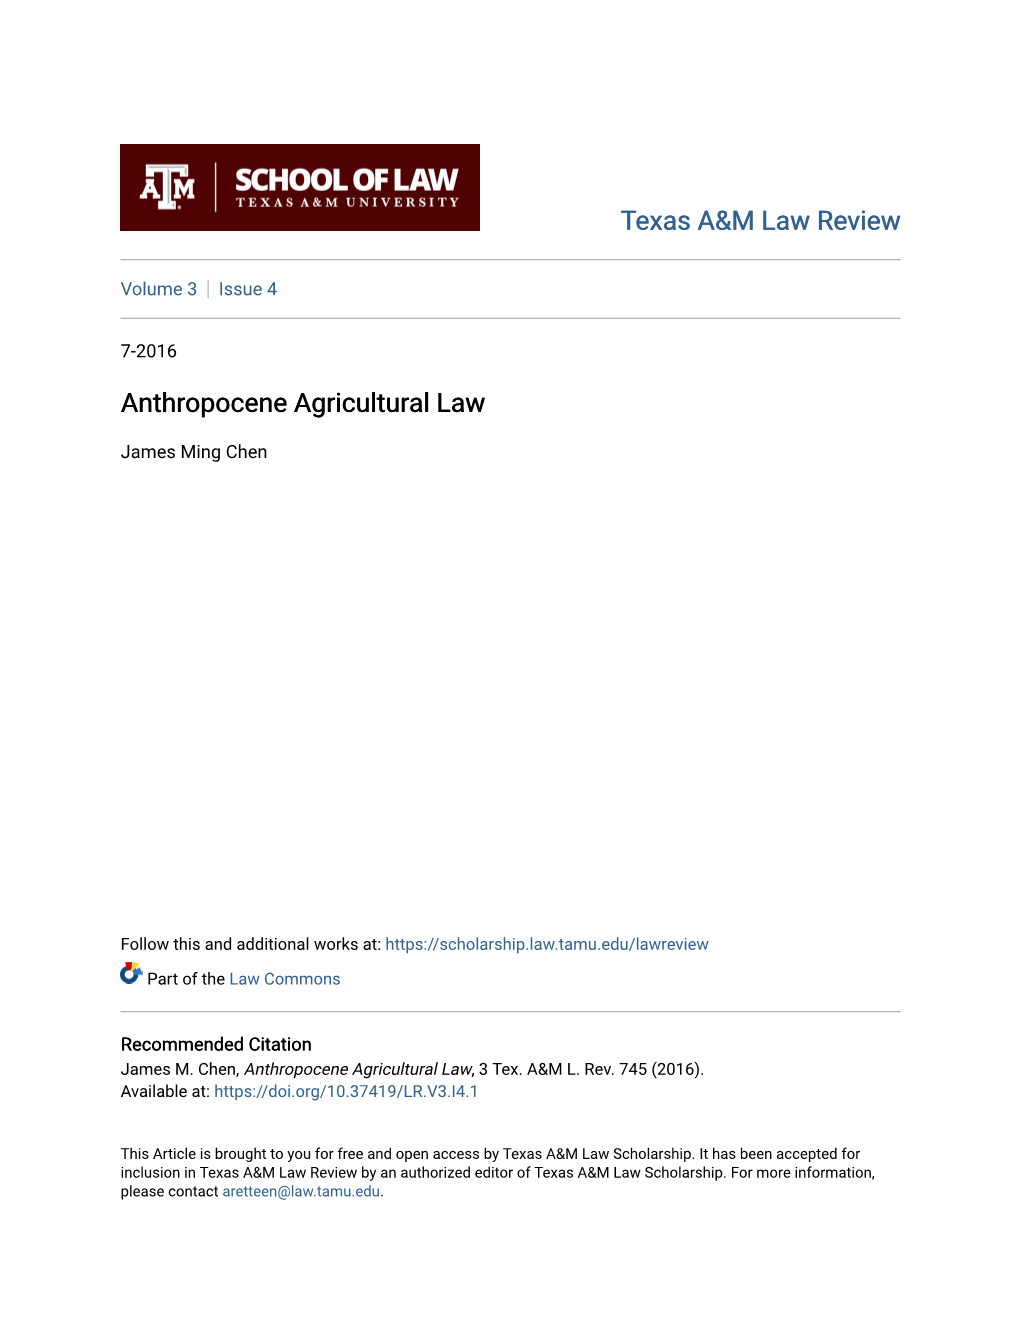 Anthropocene Agricultural Law